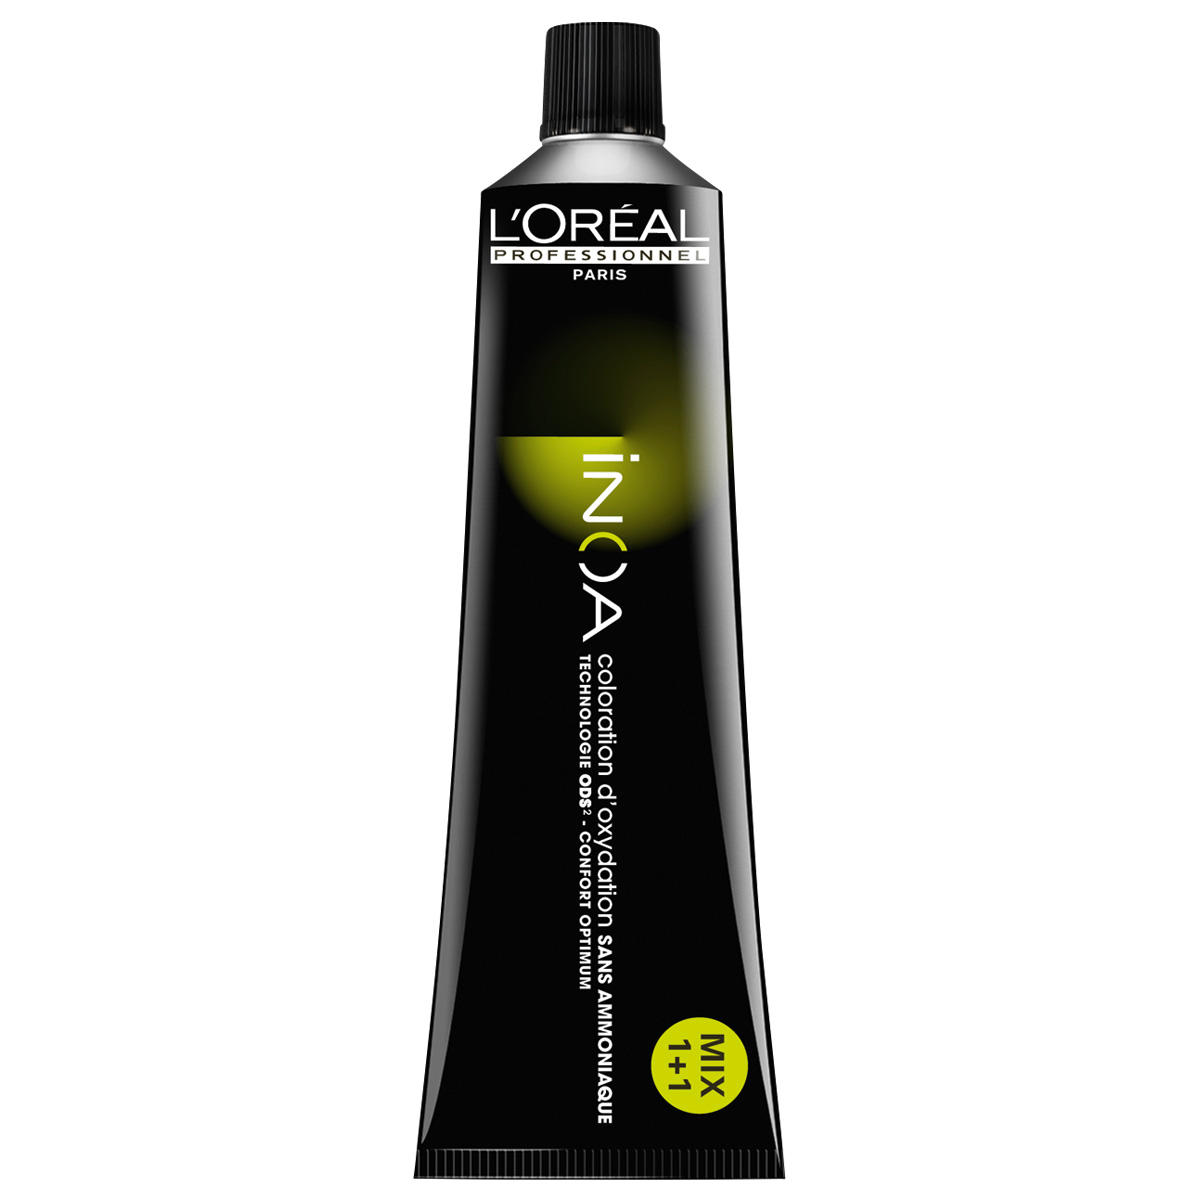 L'Oréal Professionnel Paris Coloration 7 Biondo medio, tubo 60 ml